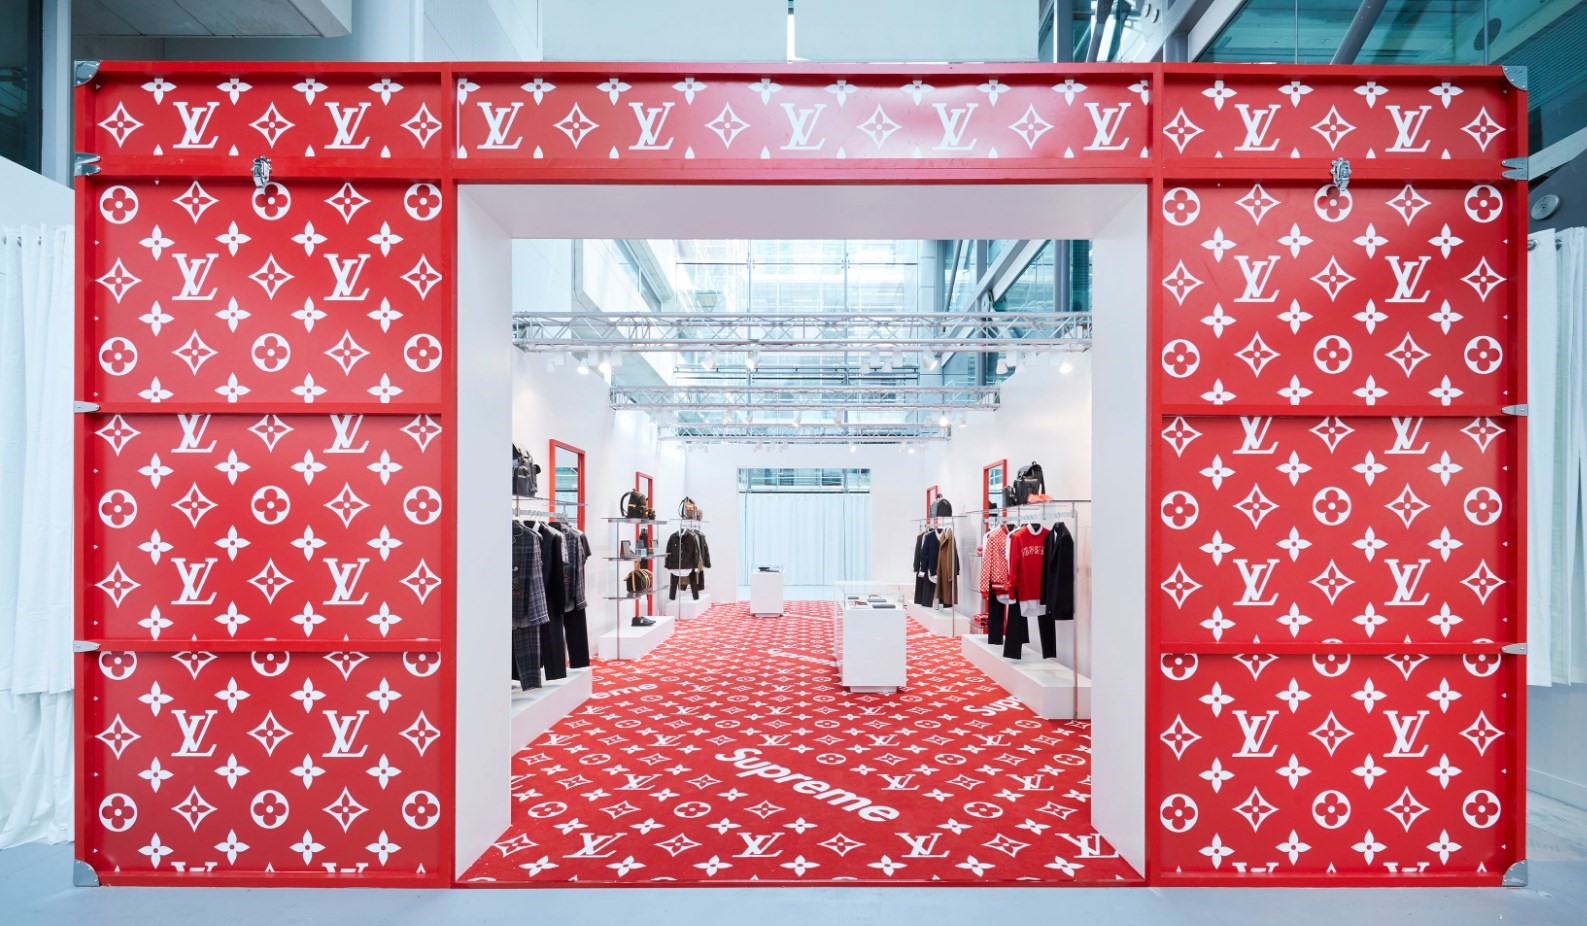 Louis Vuitton x Supreme Collection Revealed